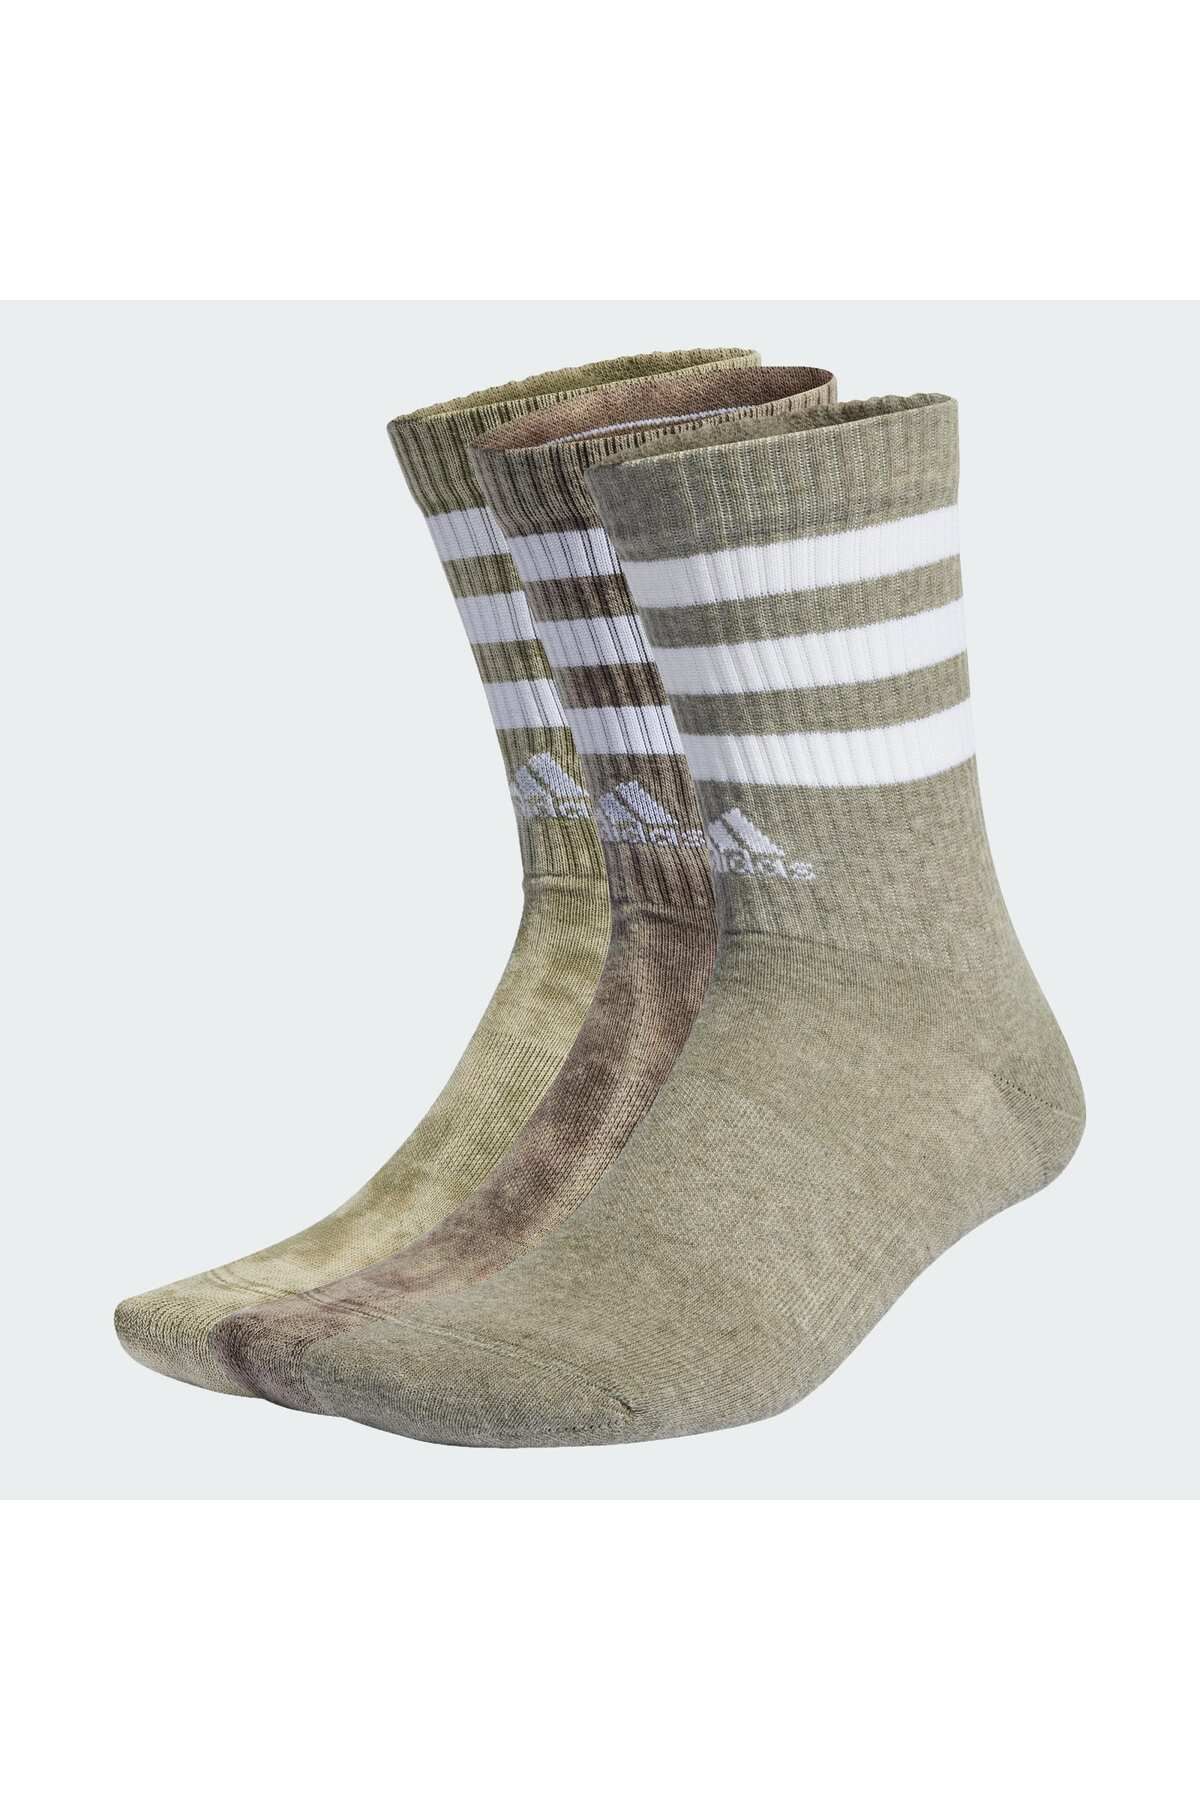 adidas 3-Stripes Stonewash Bilekli Çorap - 3 Çift